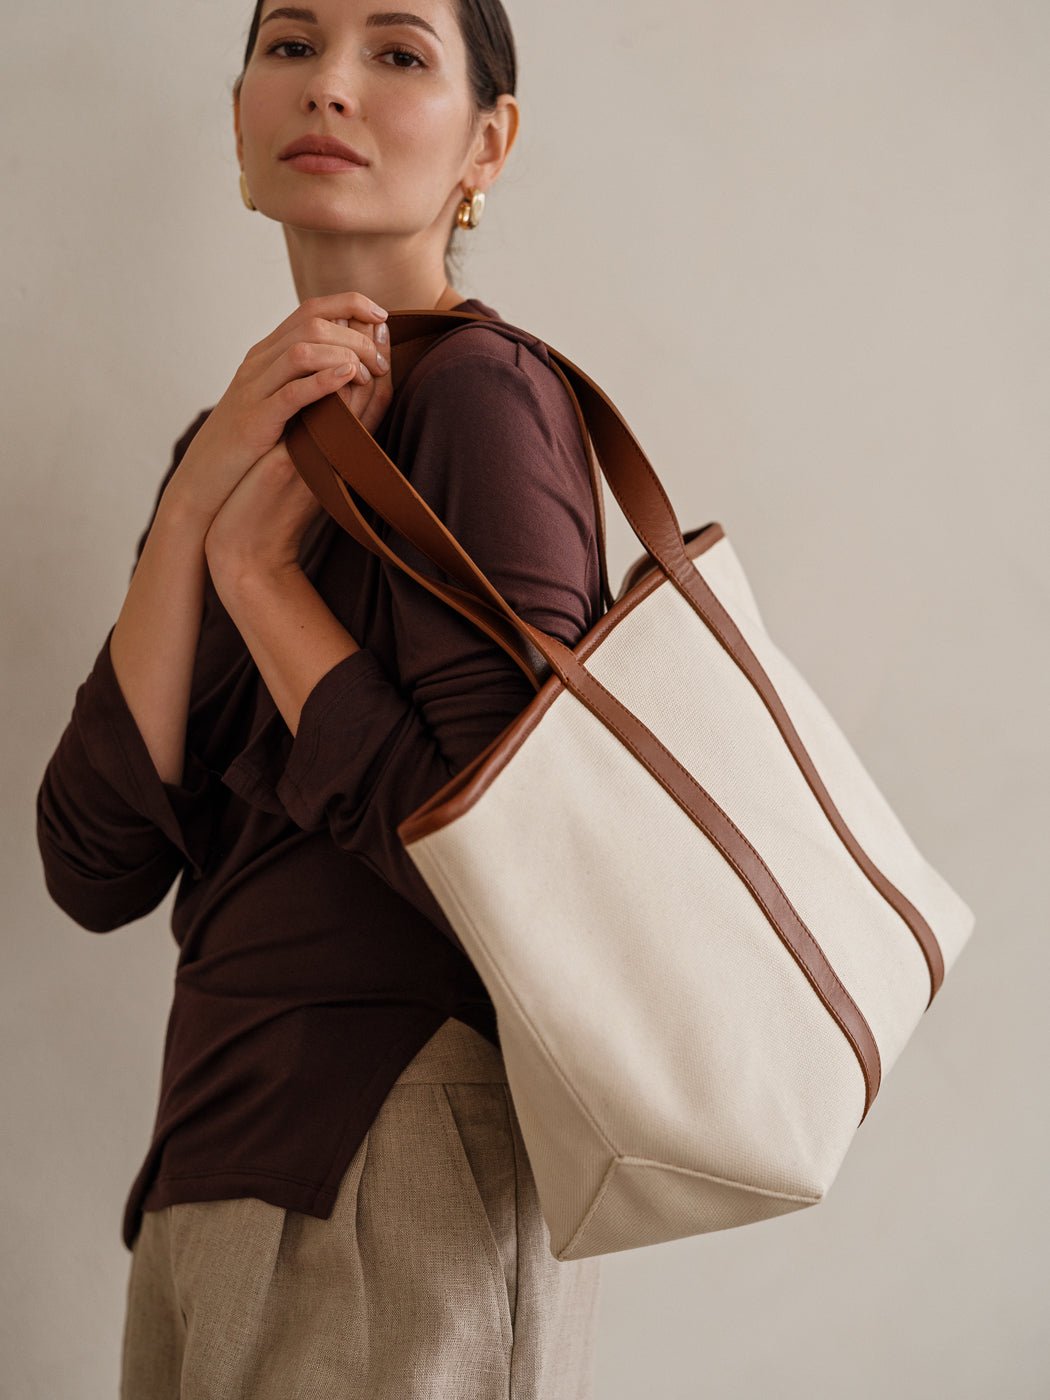  Dallas Hill Designs Large Tote Bag for Women